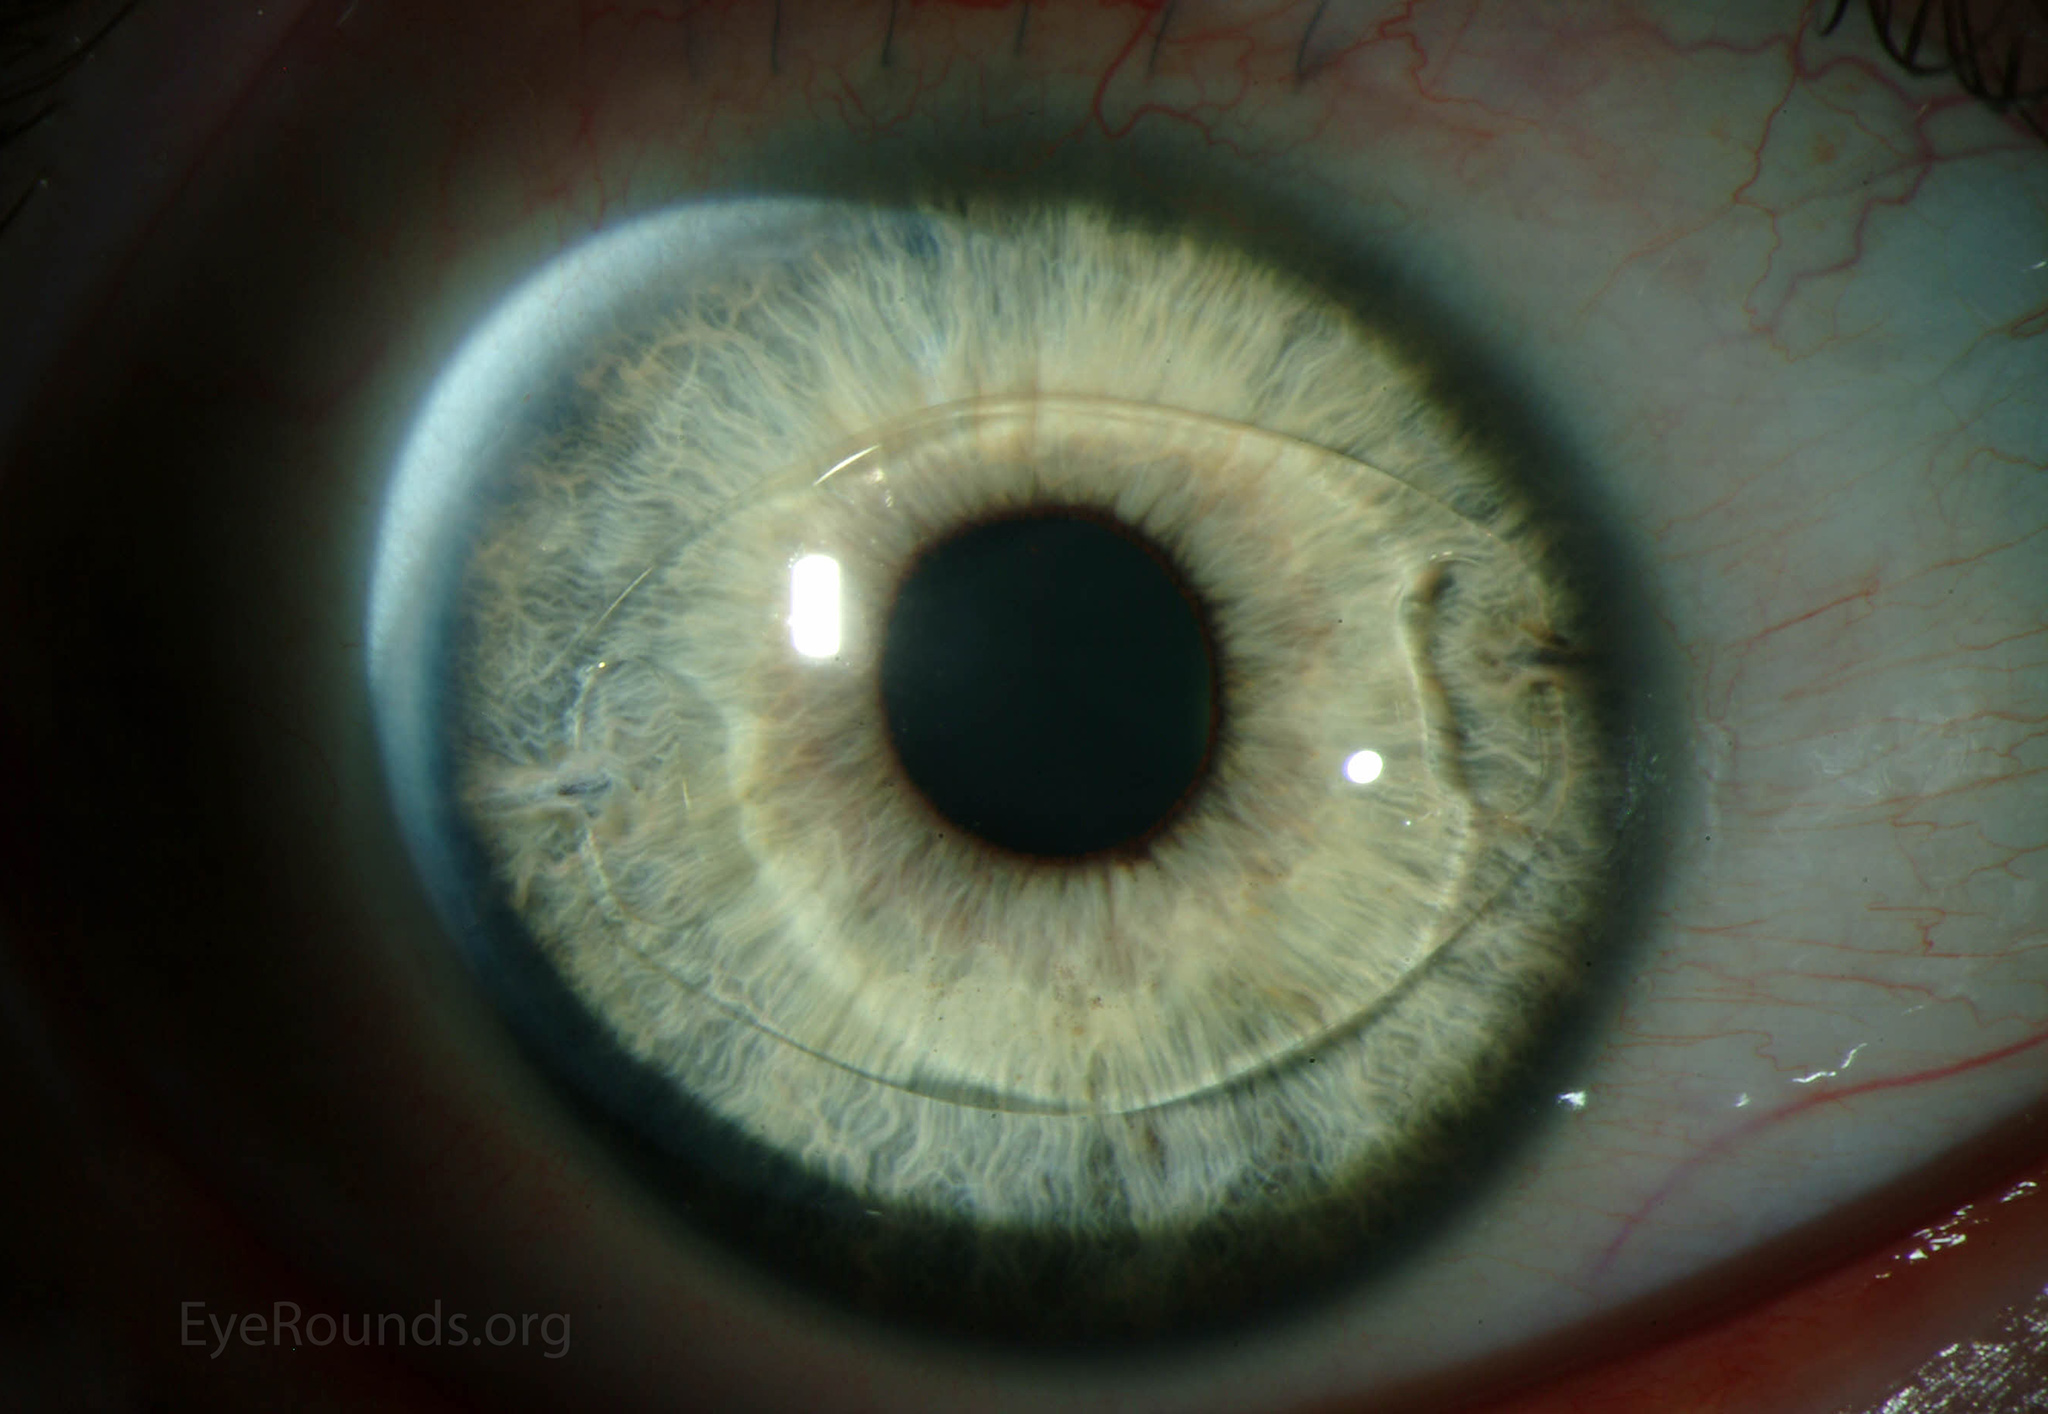 Verisyse phakic intraocular lens implant for high myopia